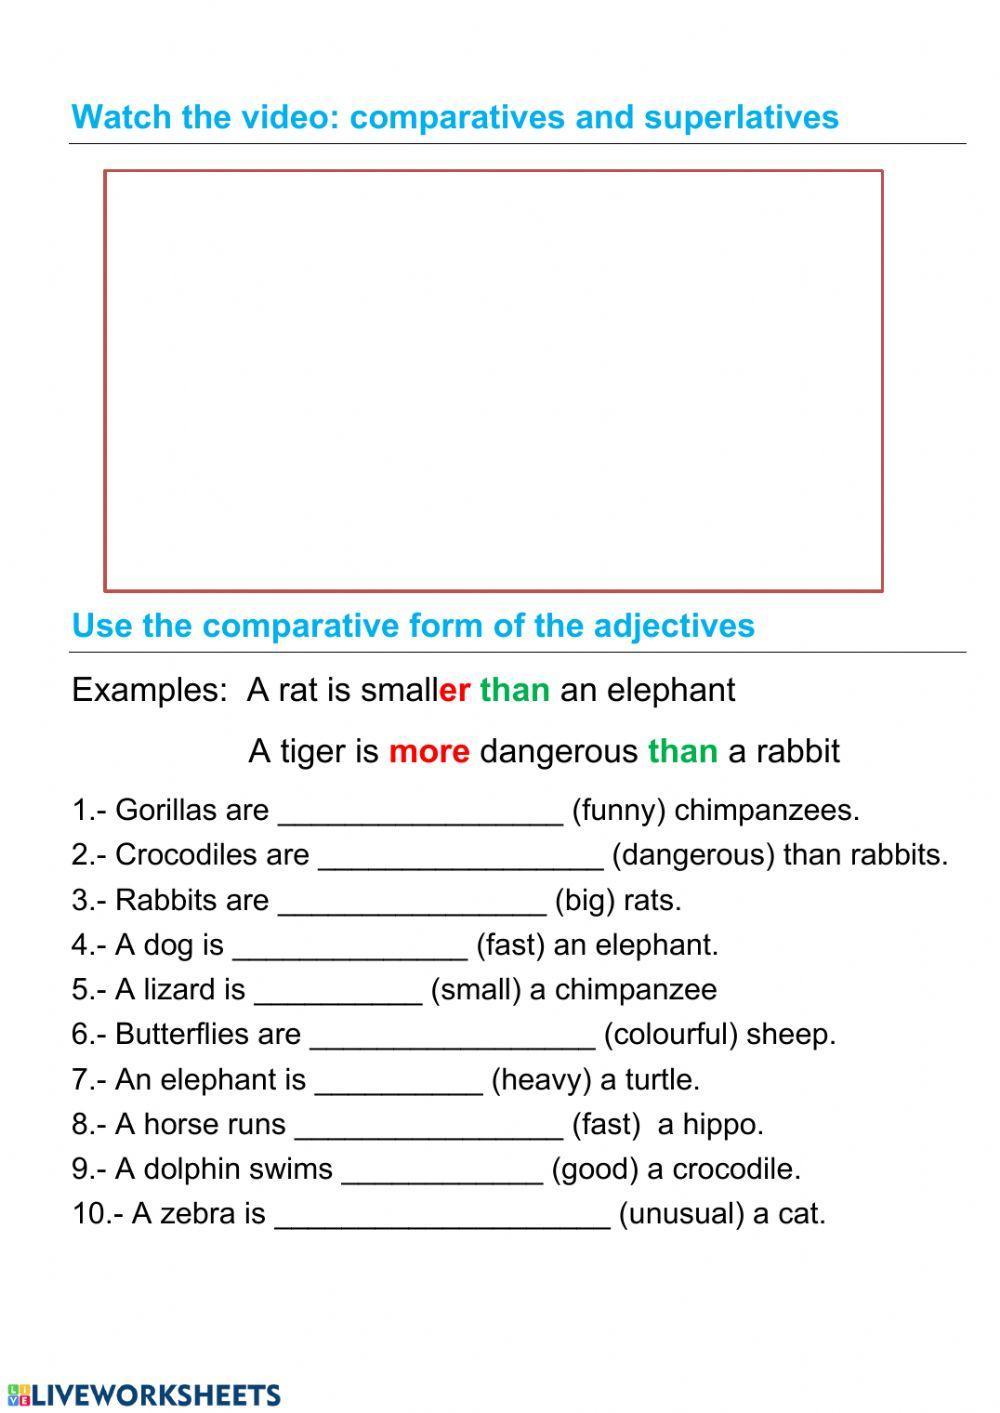 ANIMALS: COMPARATIVES AND SUPERLATIVES